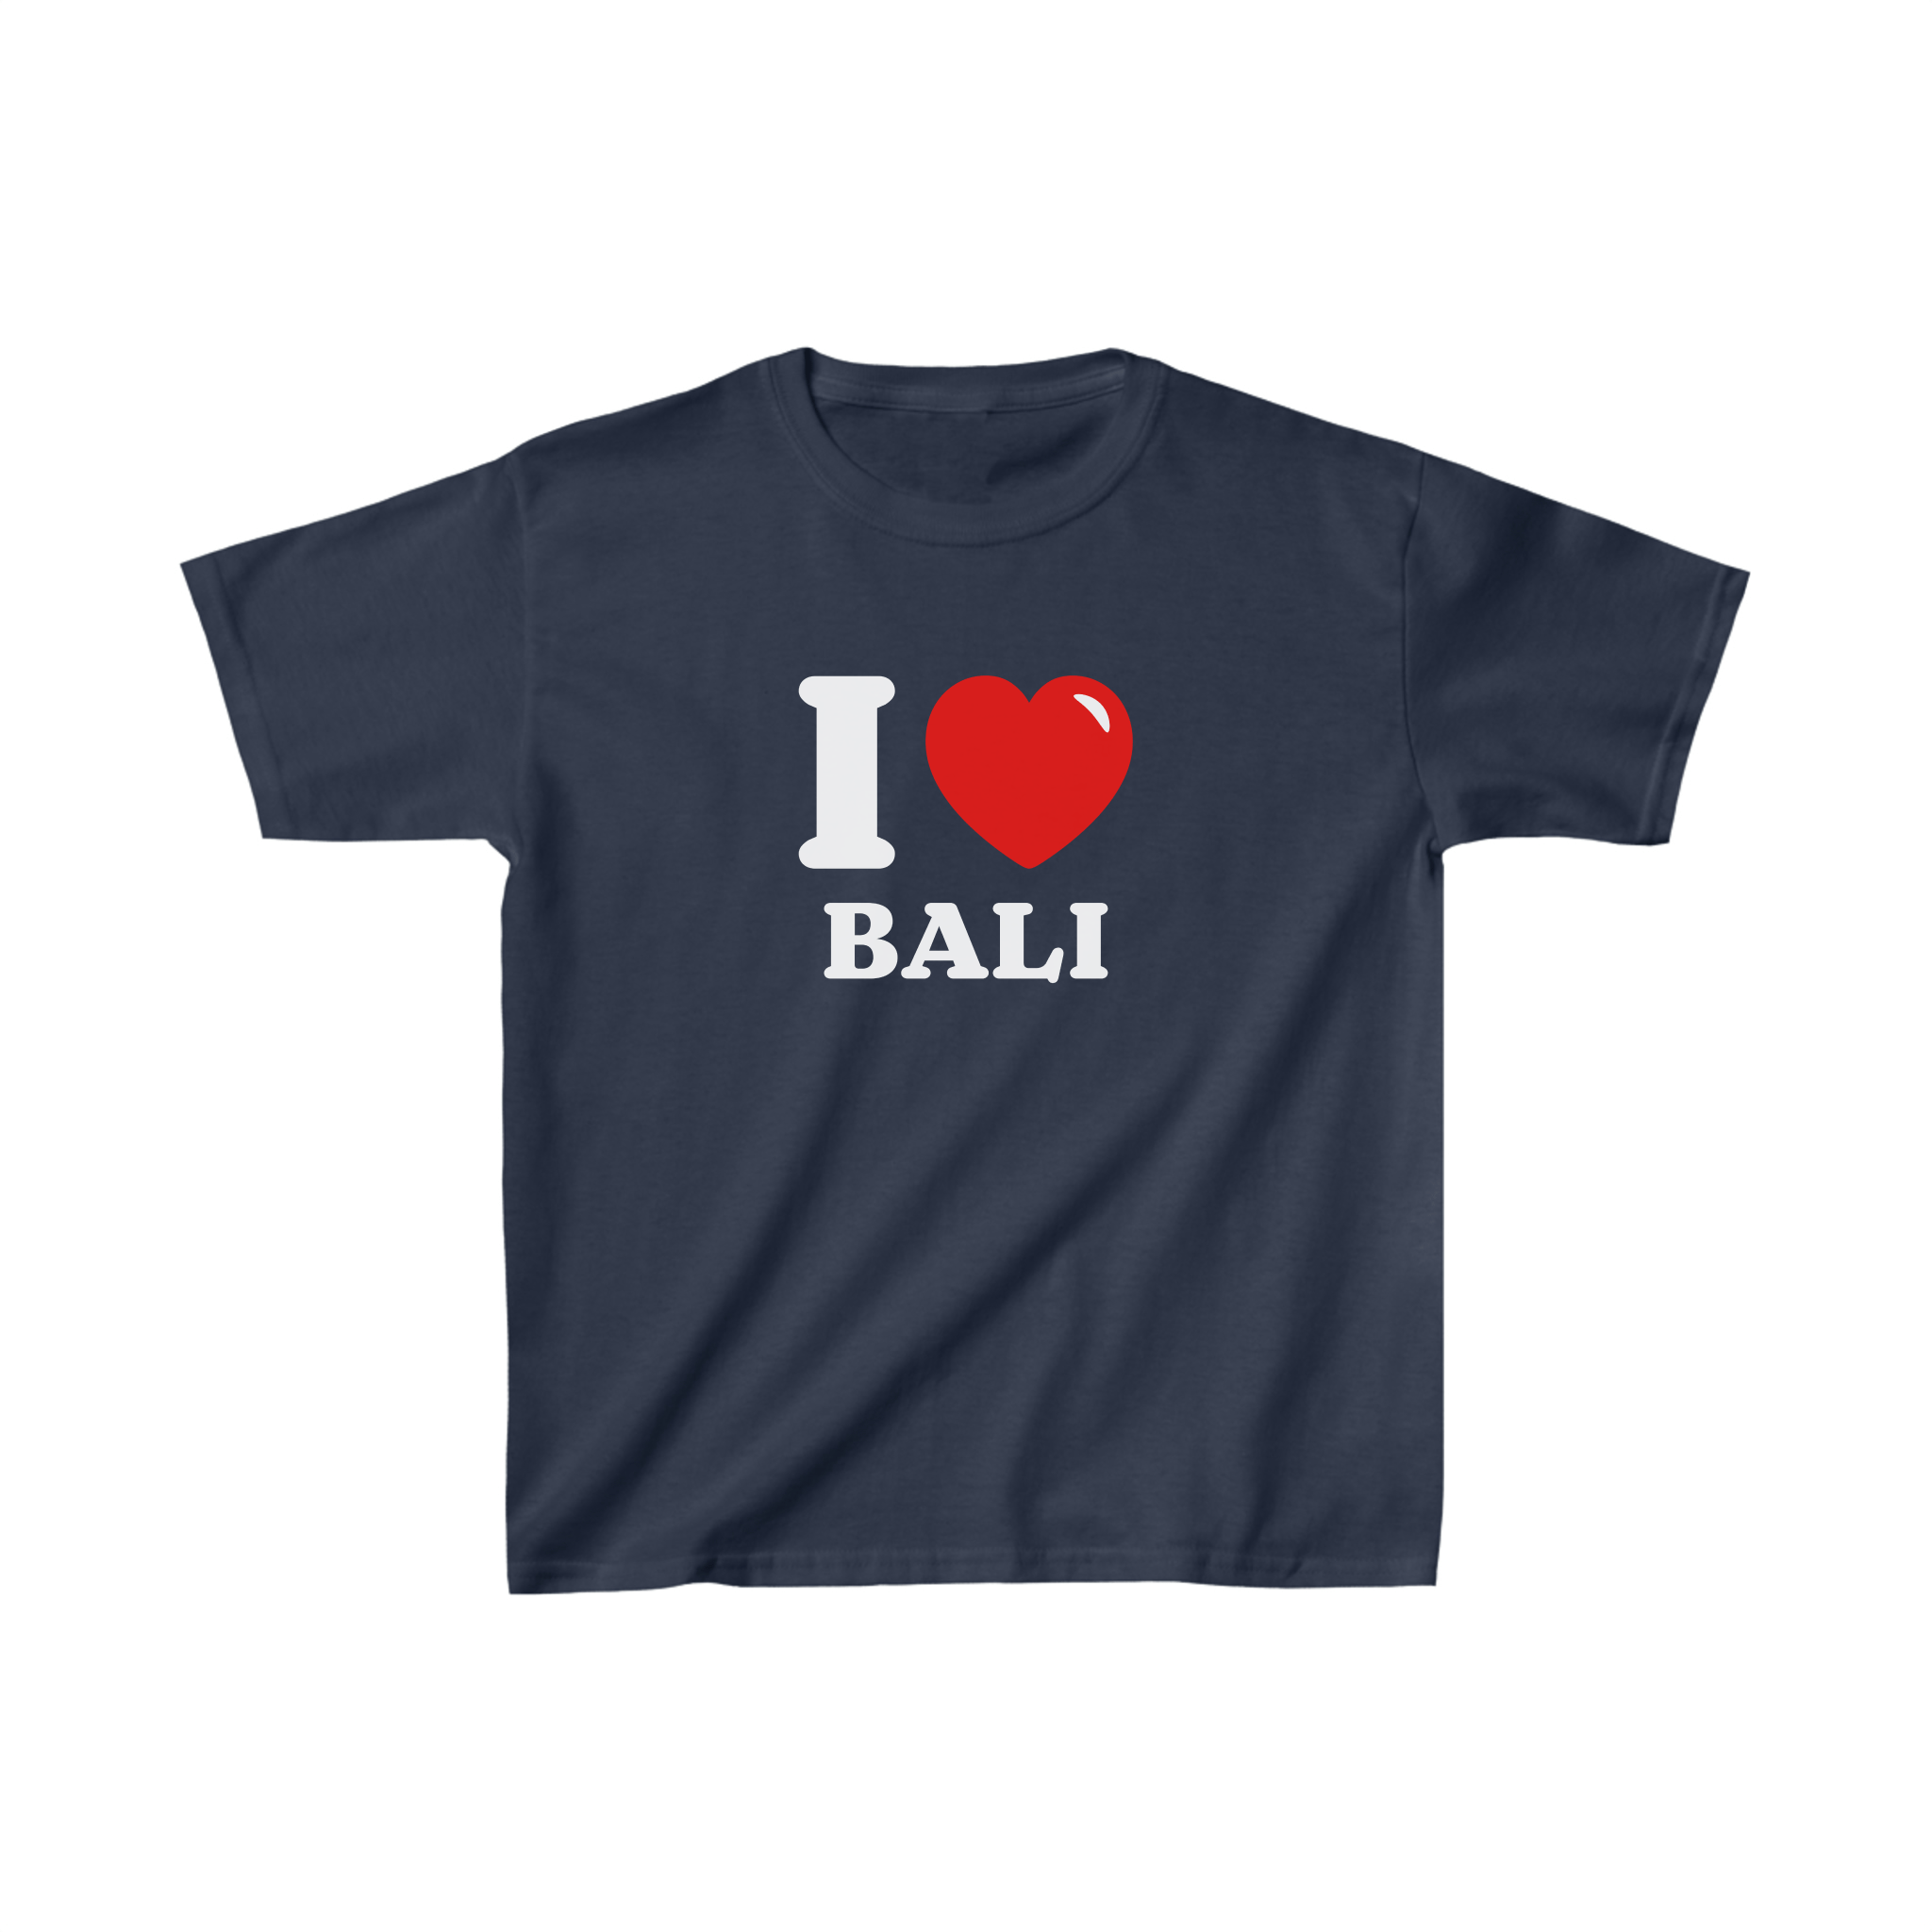 'I love Bali' baby tee - In Print We Trust